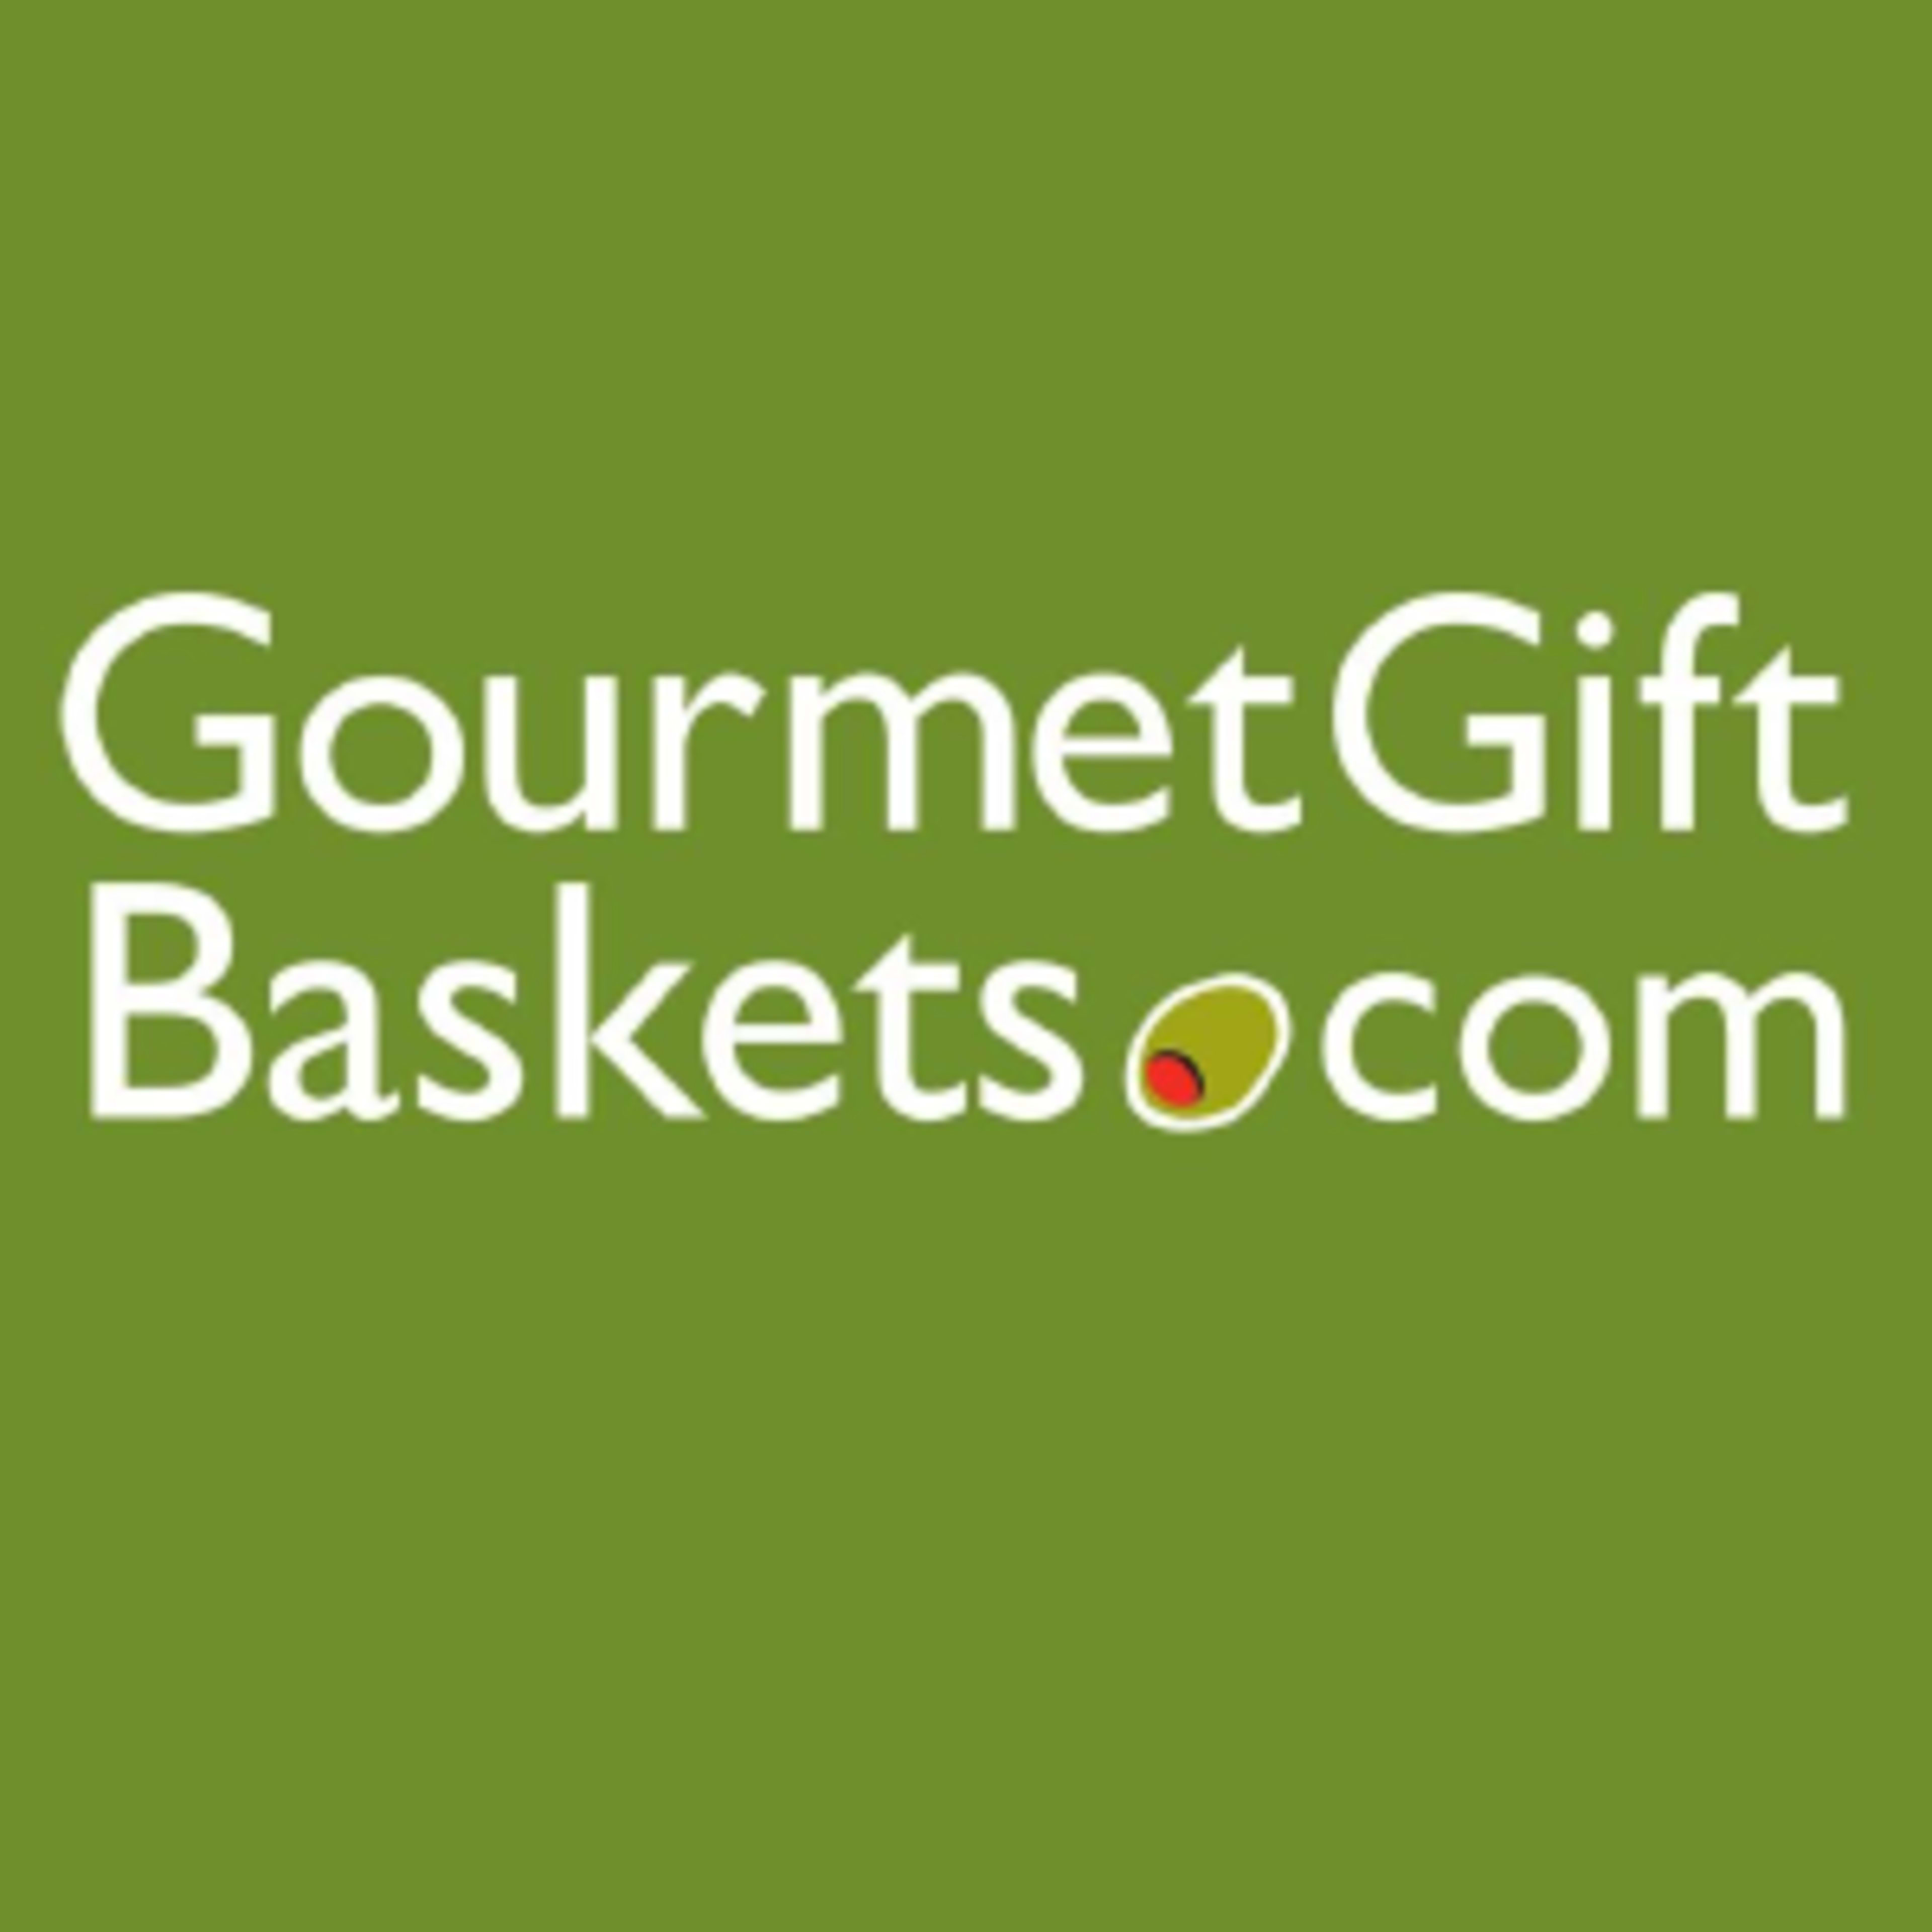 Gourmet Gift Baskets Code